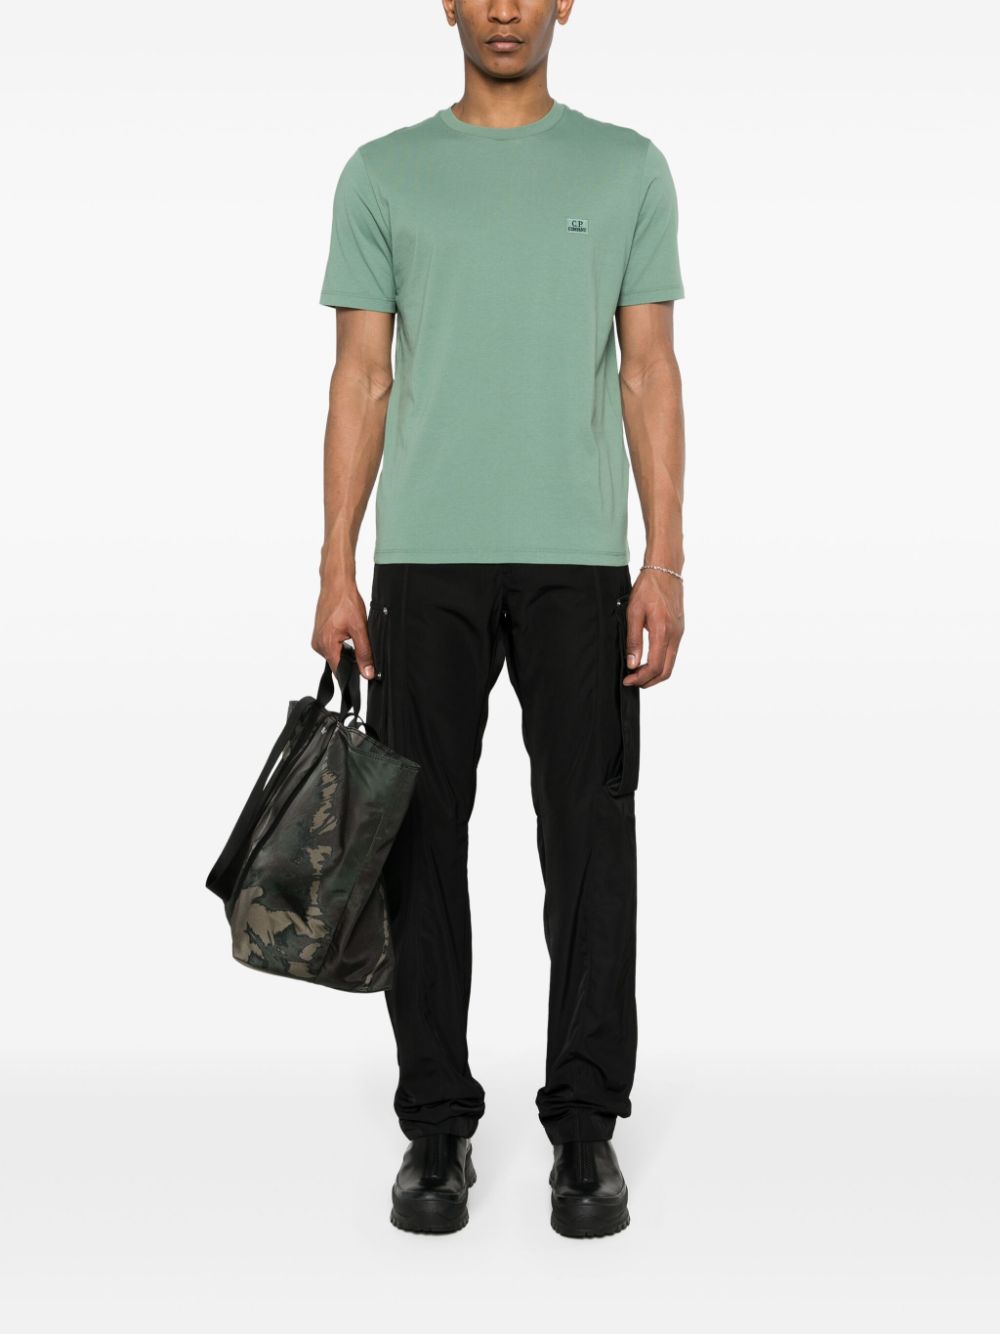 C.P. Company -T-shirt green bay 30/1 Jersey à logo - Lothaire